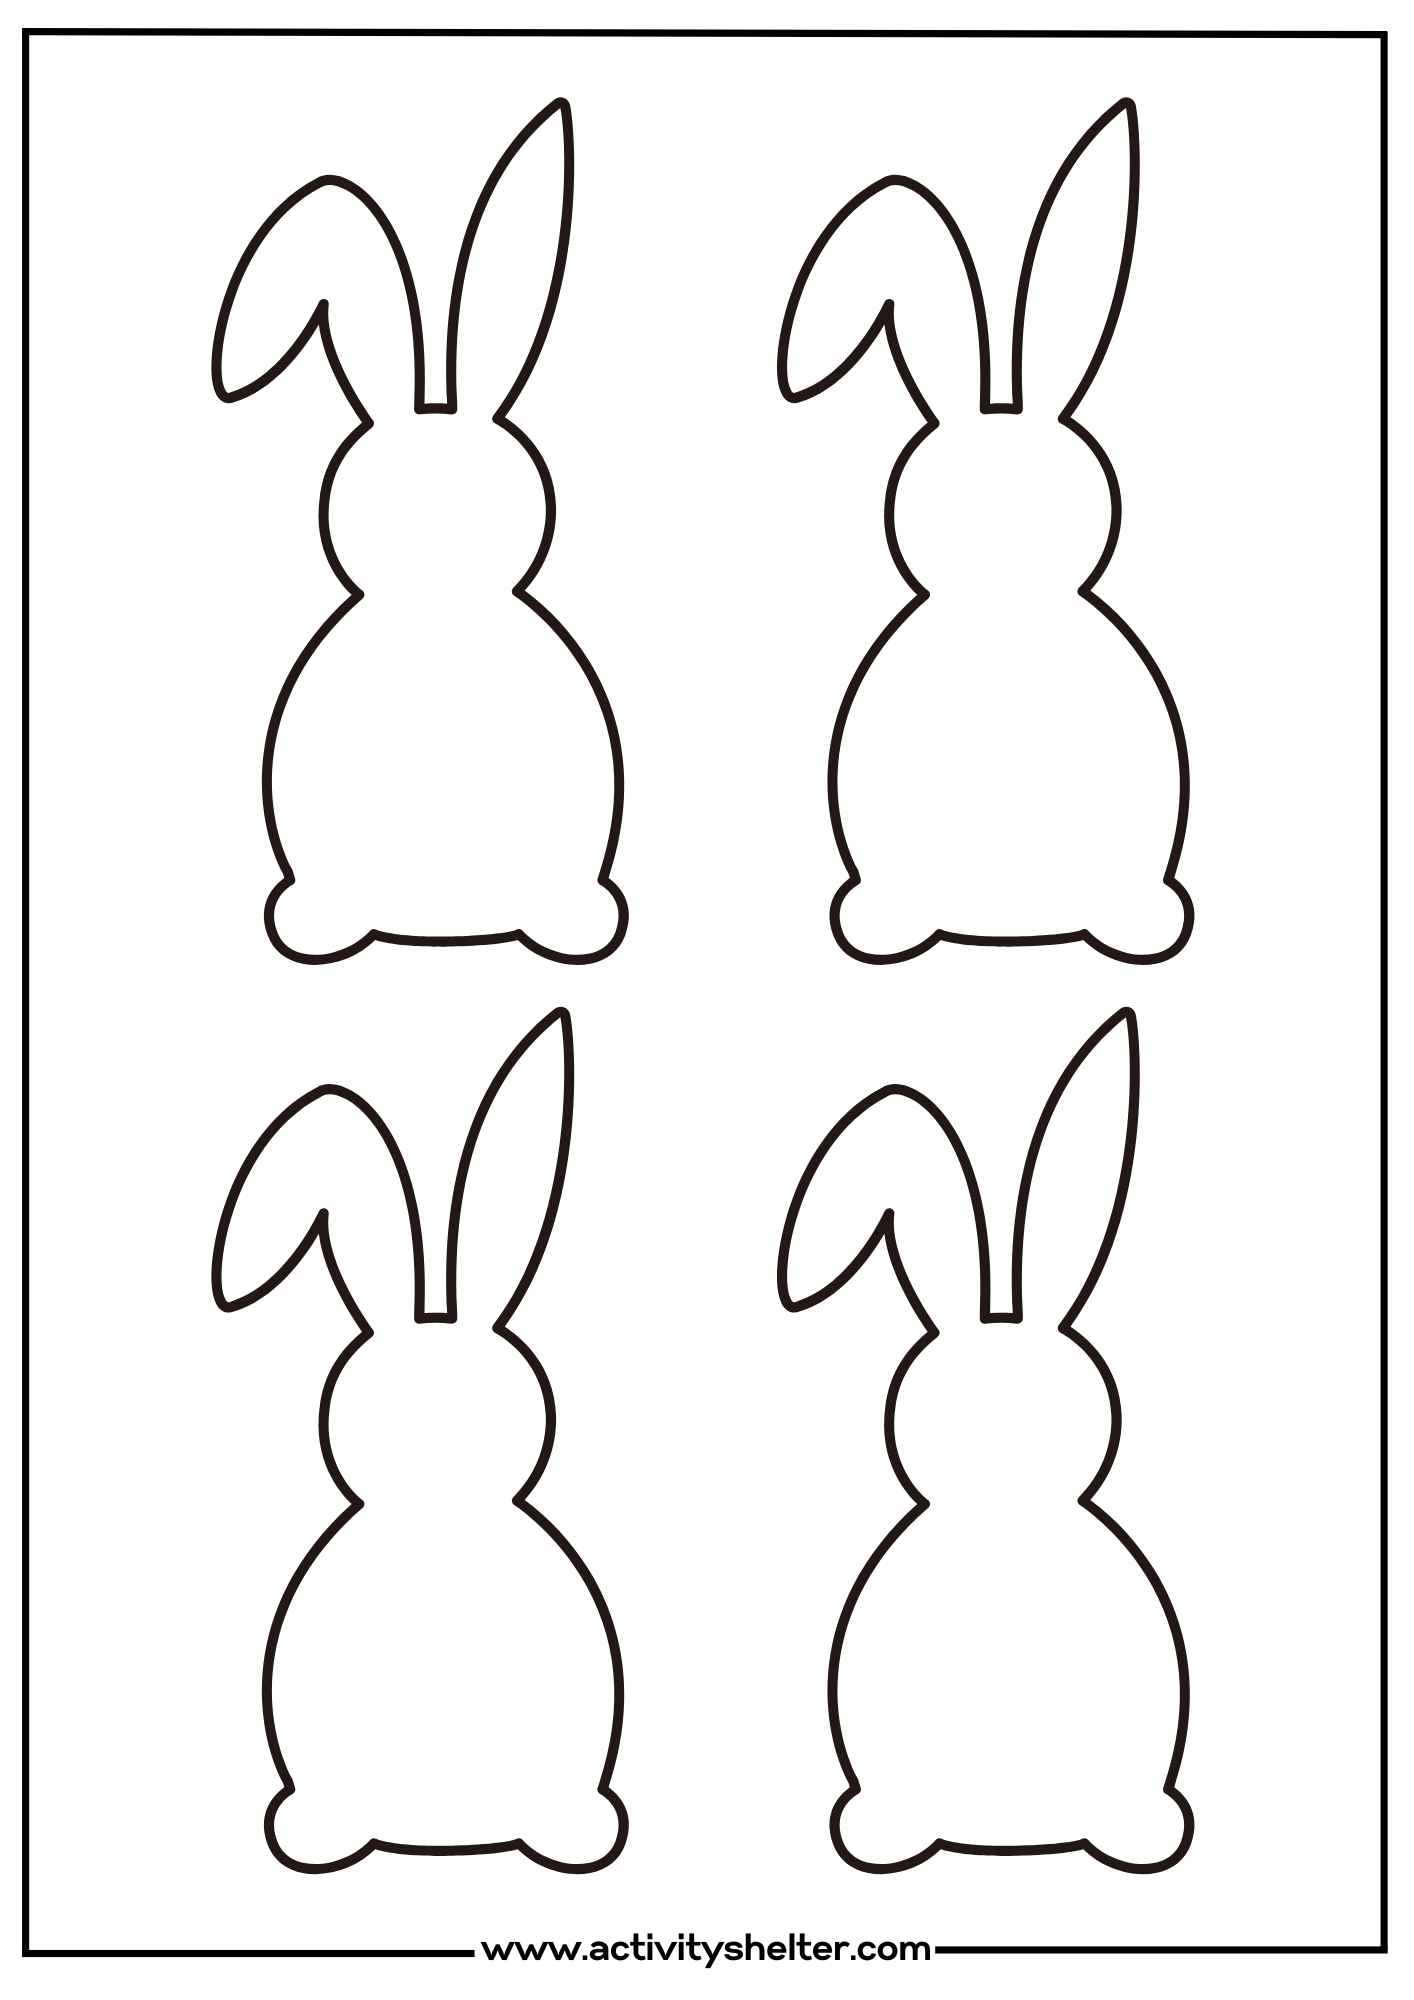 Free Printable Easter Bunny Template